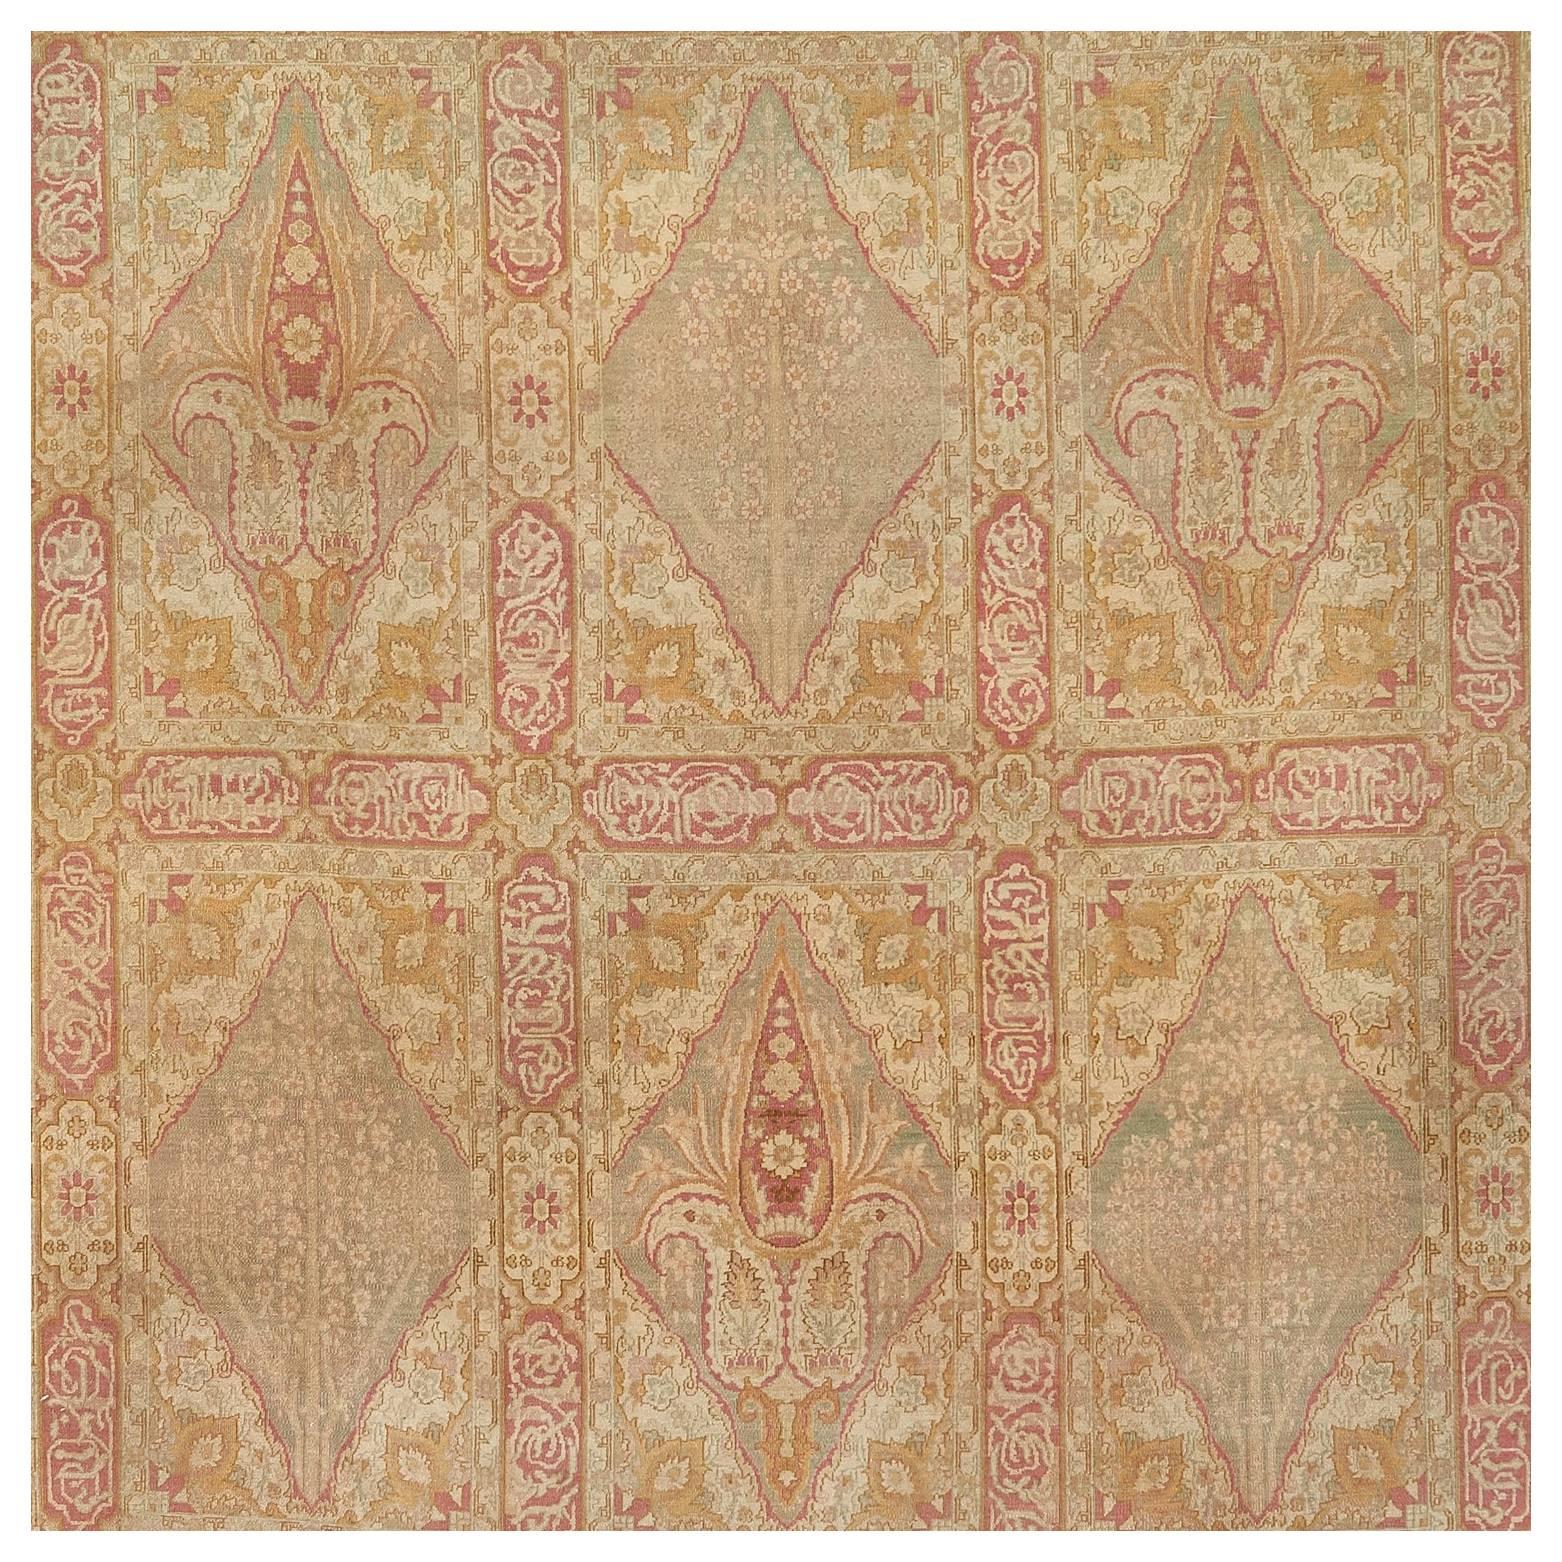 19th Century Amritsar Carpet For Sale